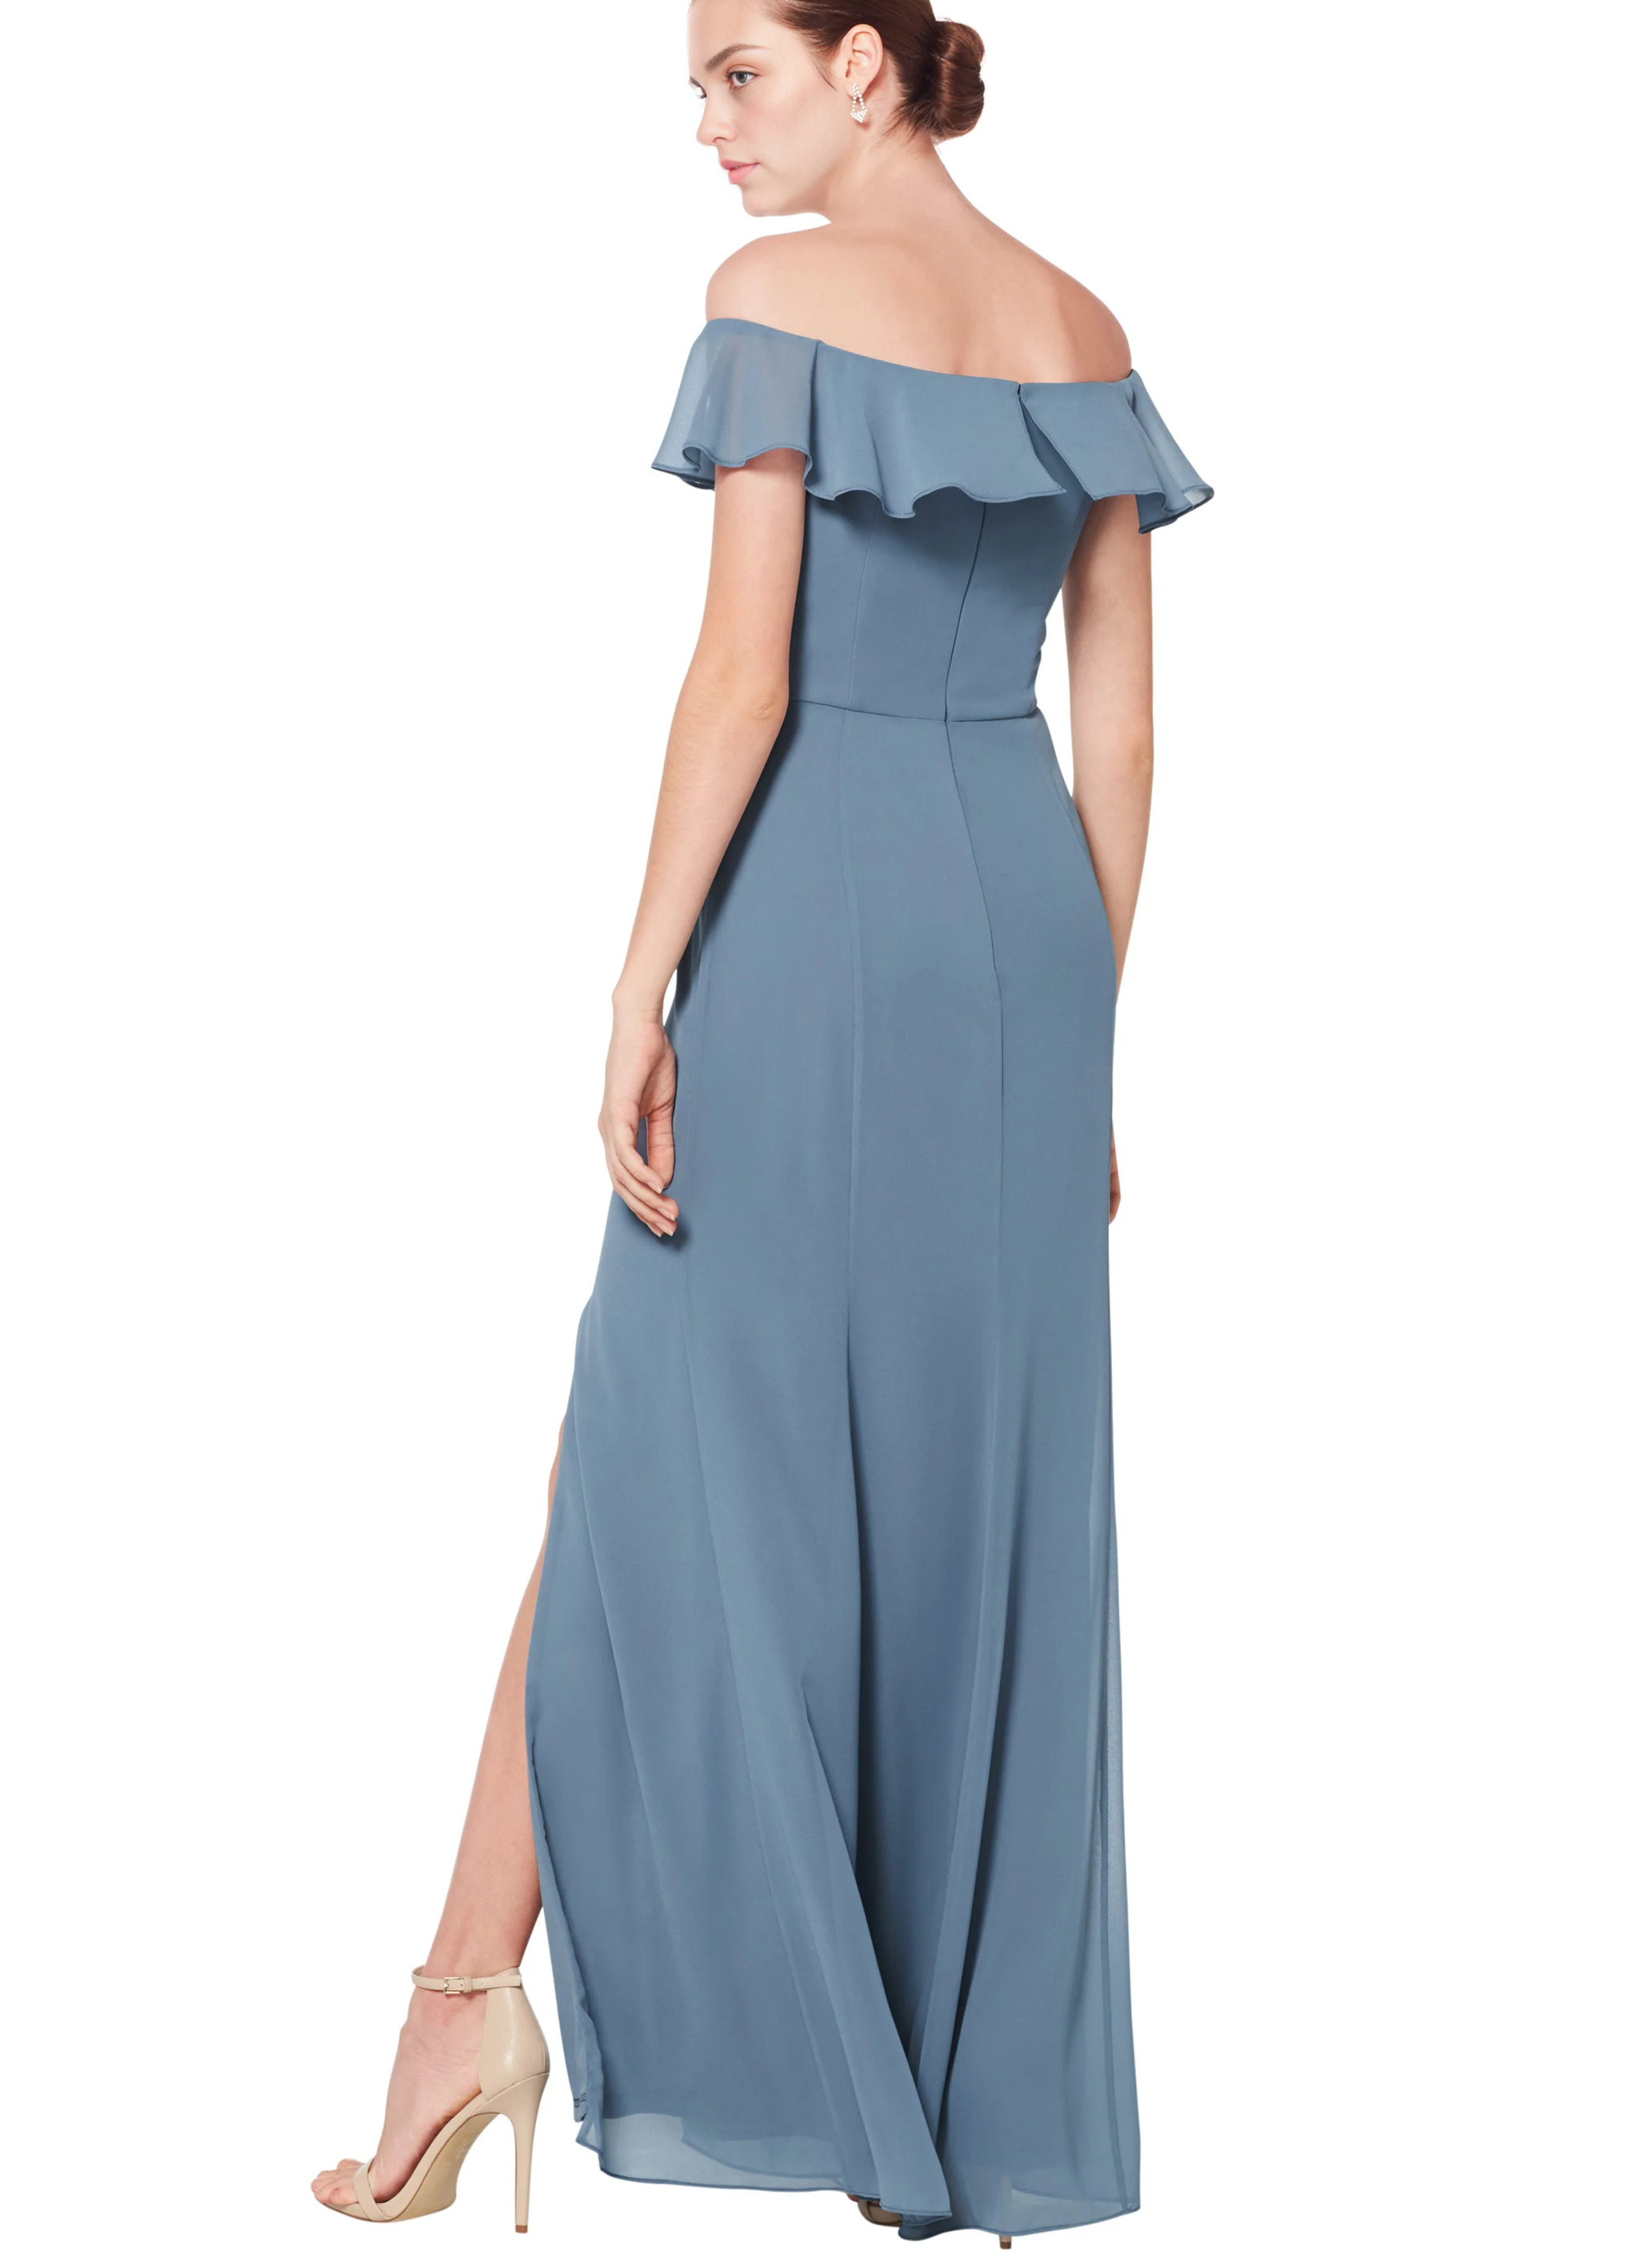 Blue Off-The-Shoulder Sheath/Column Bridesmaid Dresses With Split Front